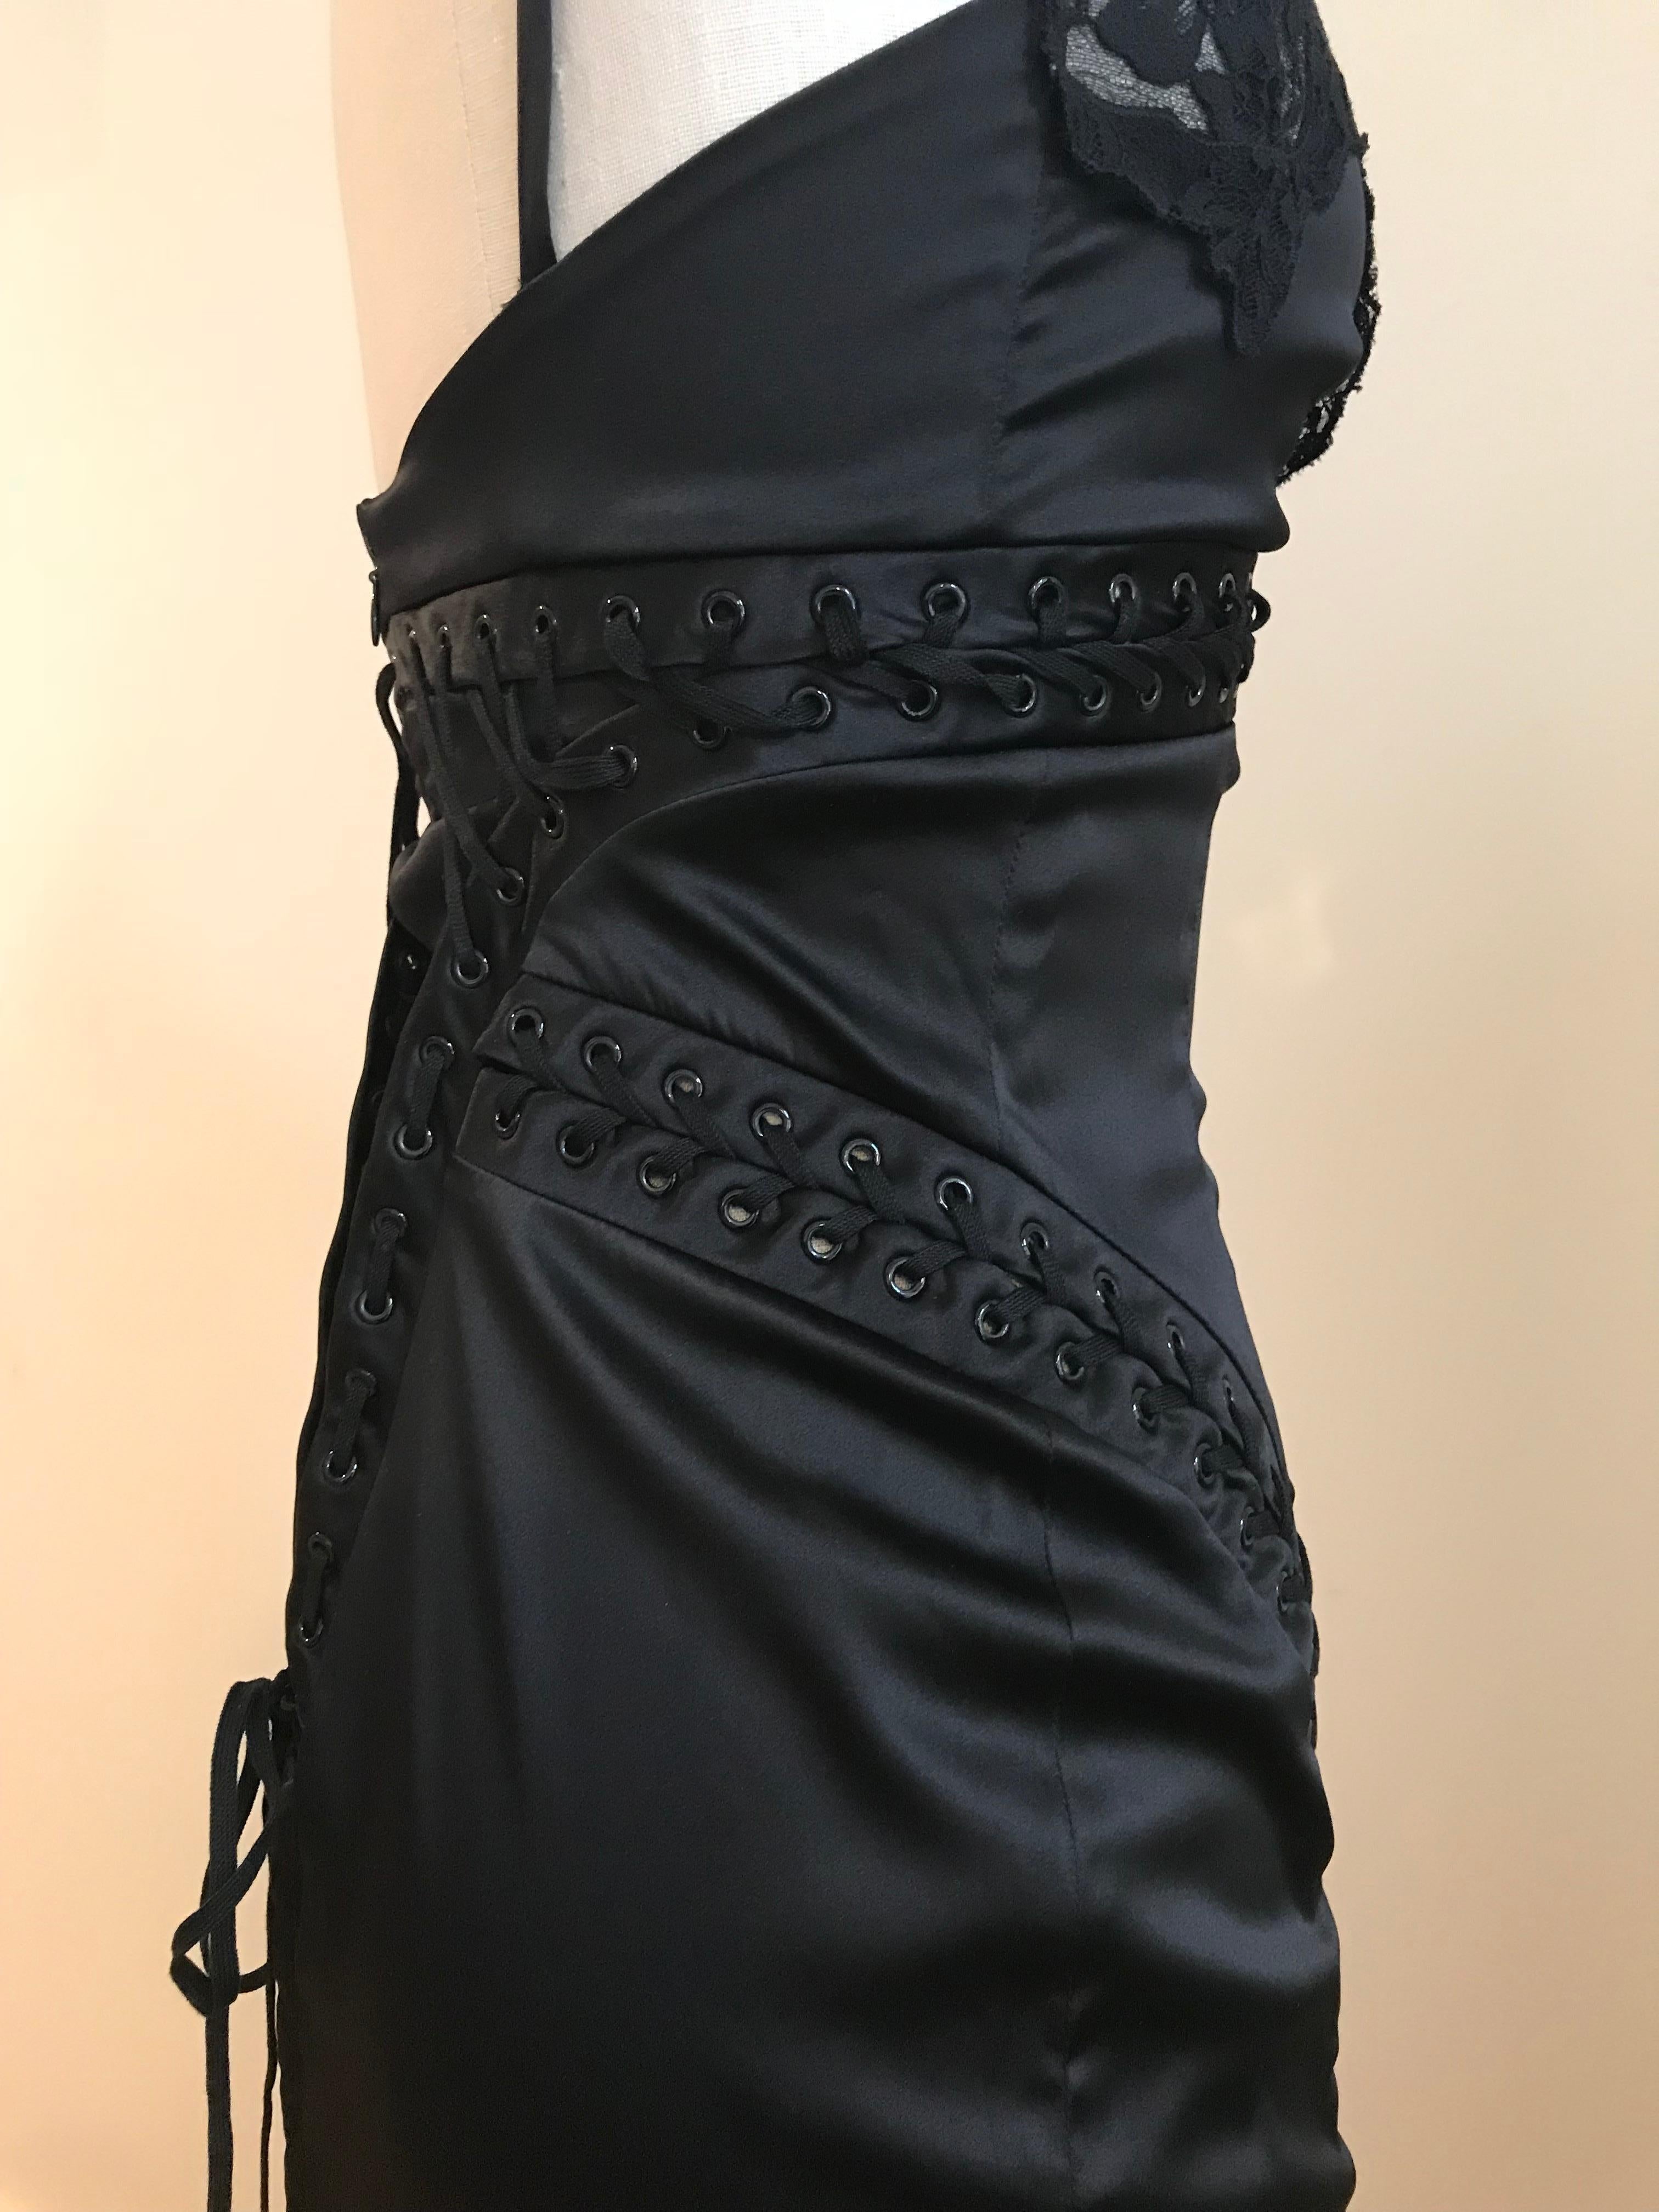 Dolce & Gabbana Black Satin Lace Up Midi Dress with Lace Trim 2